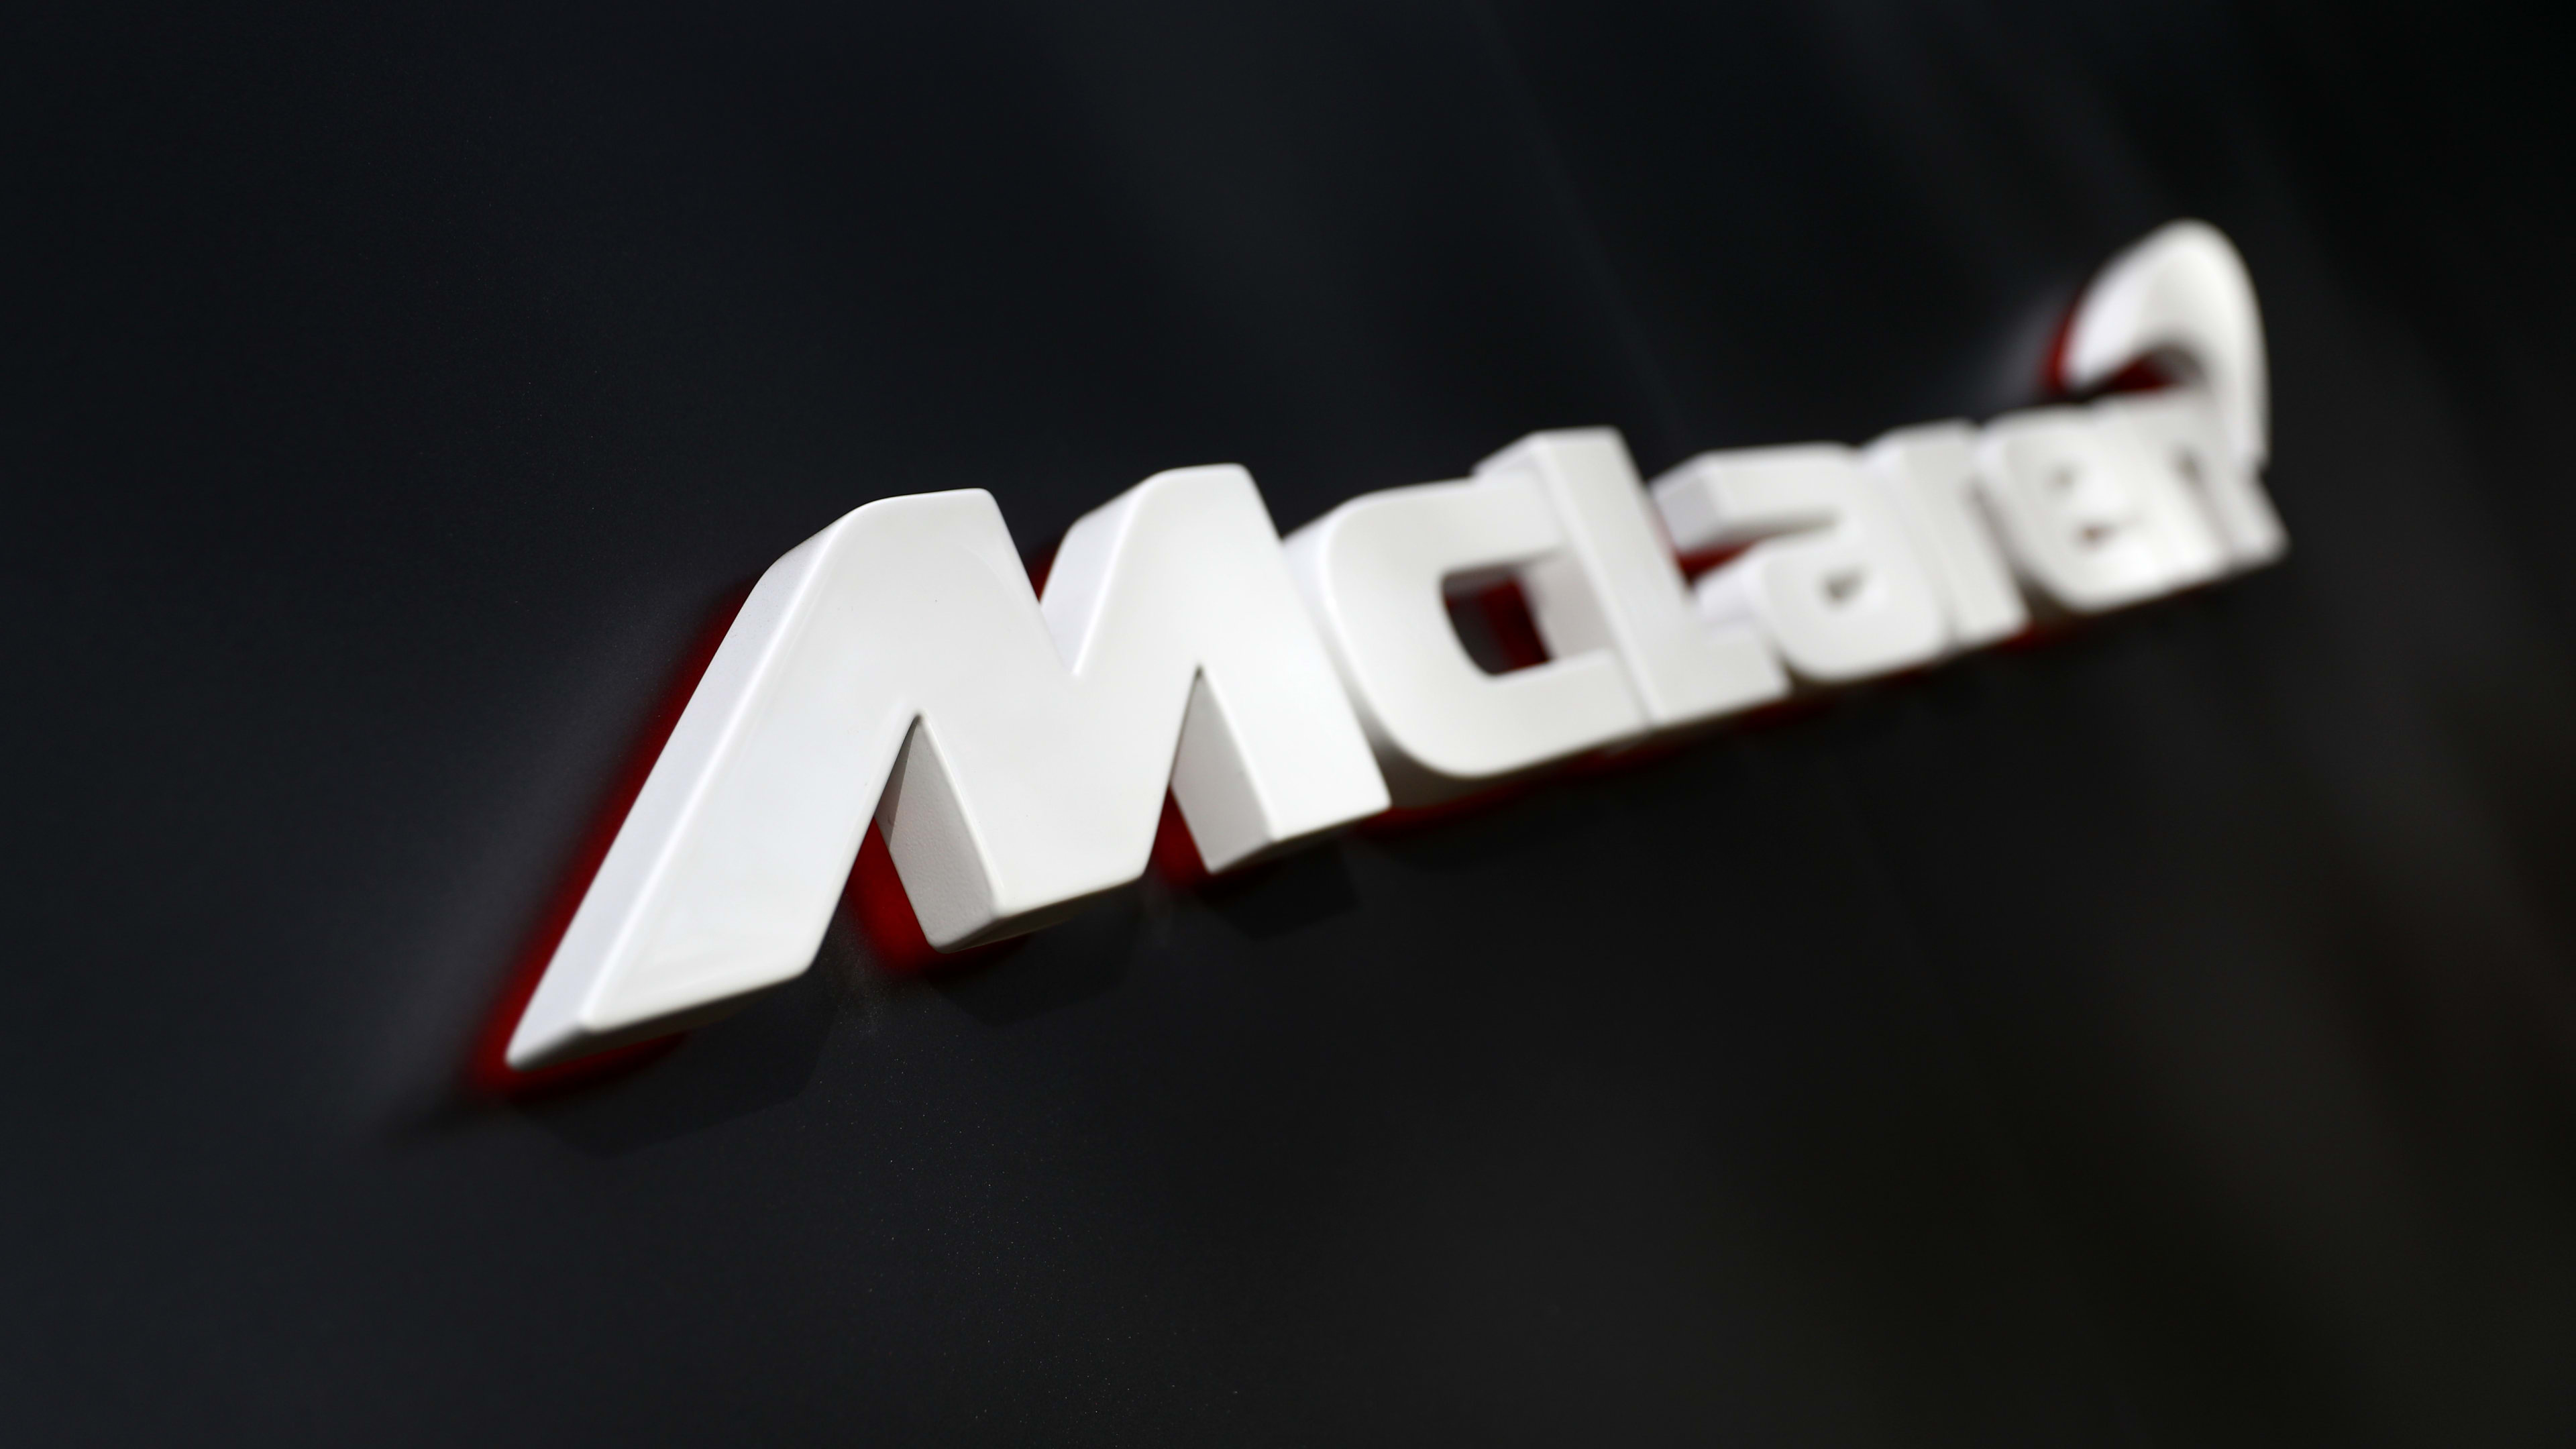 Mclaren Set Date To Unveil 2021 F1 Car The Mcl35m Formula 1